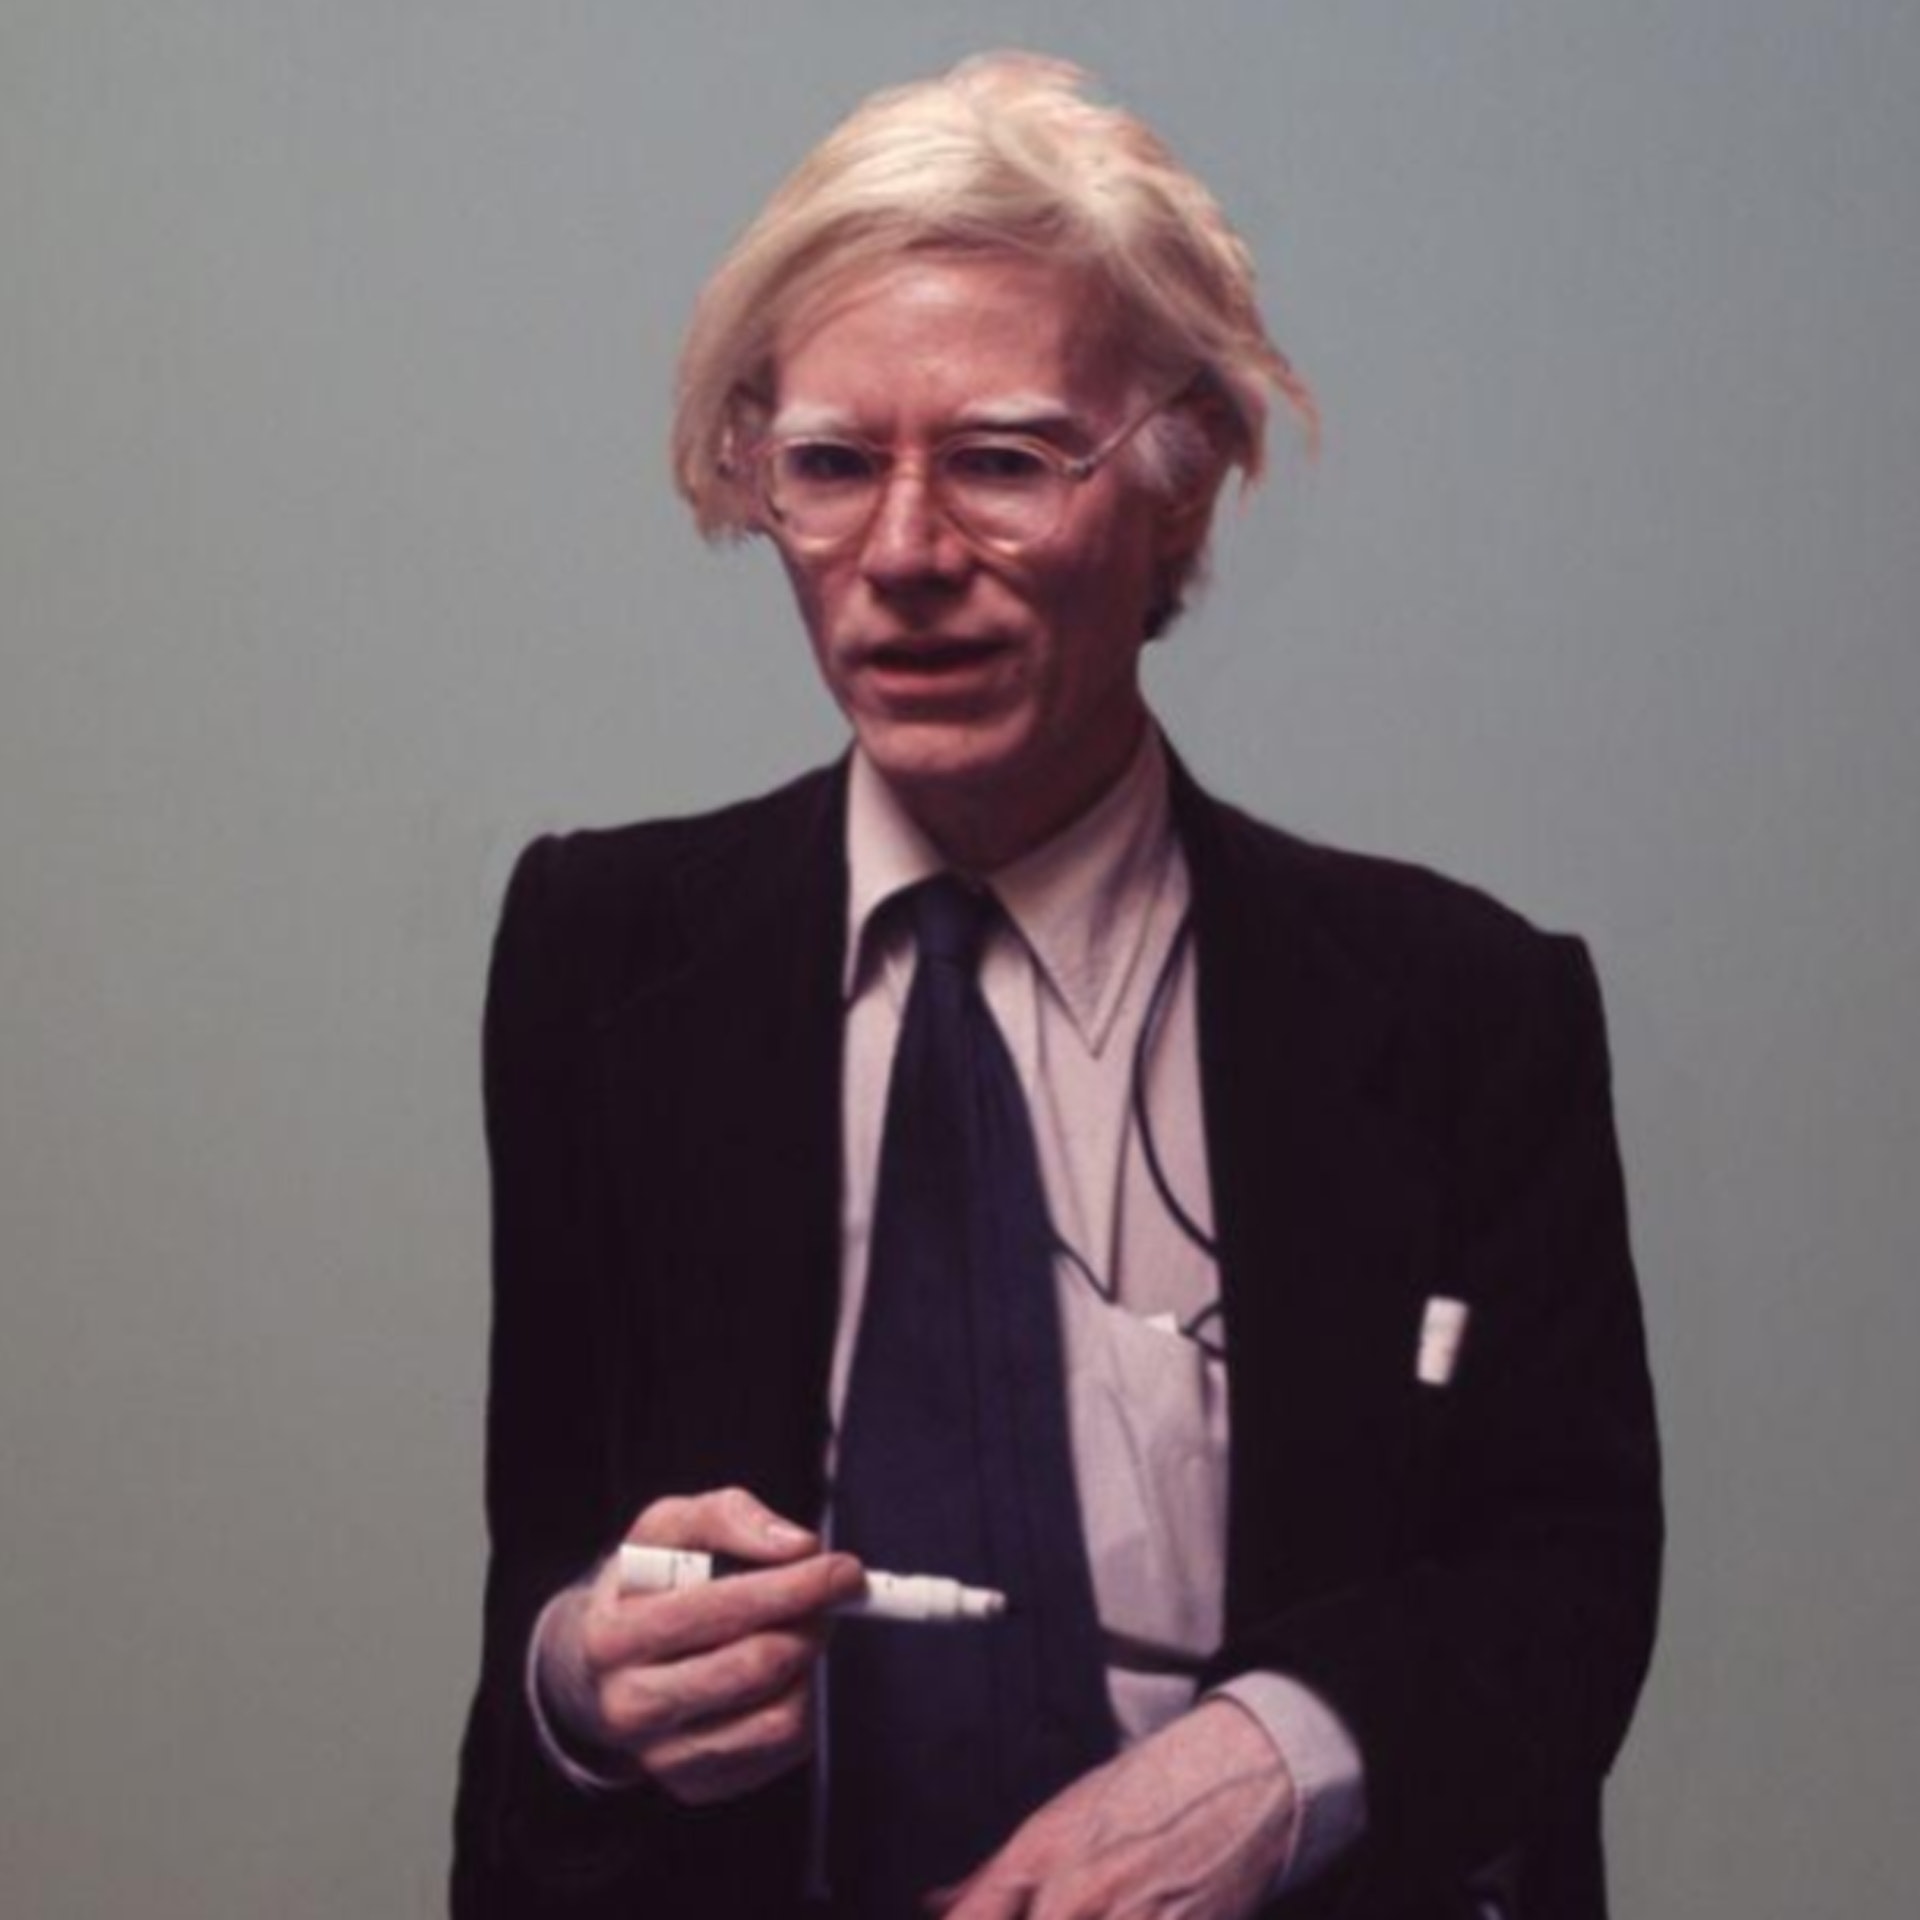 Andy Warhol時尚Icon眼鏡造型顛覆性白髮透明look